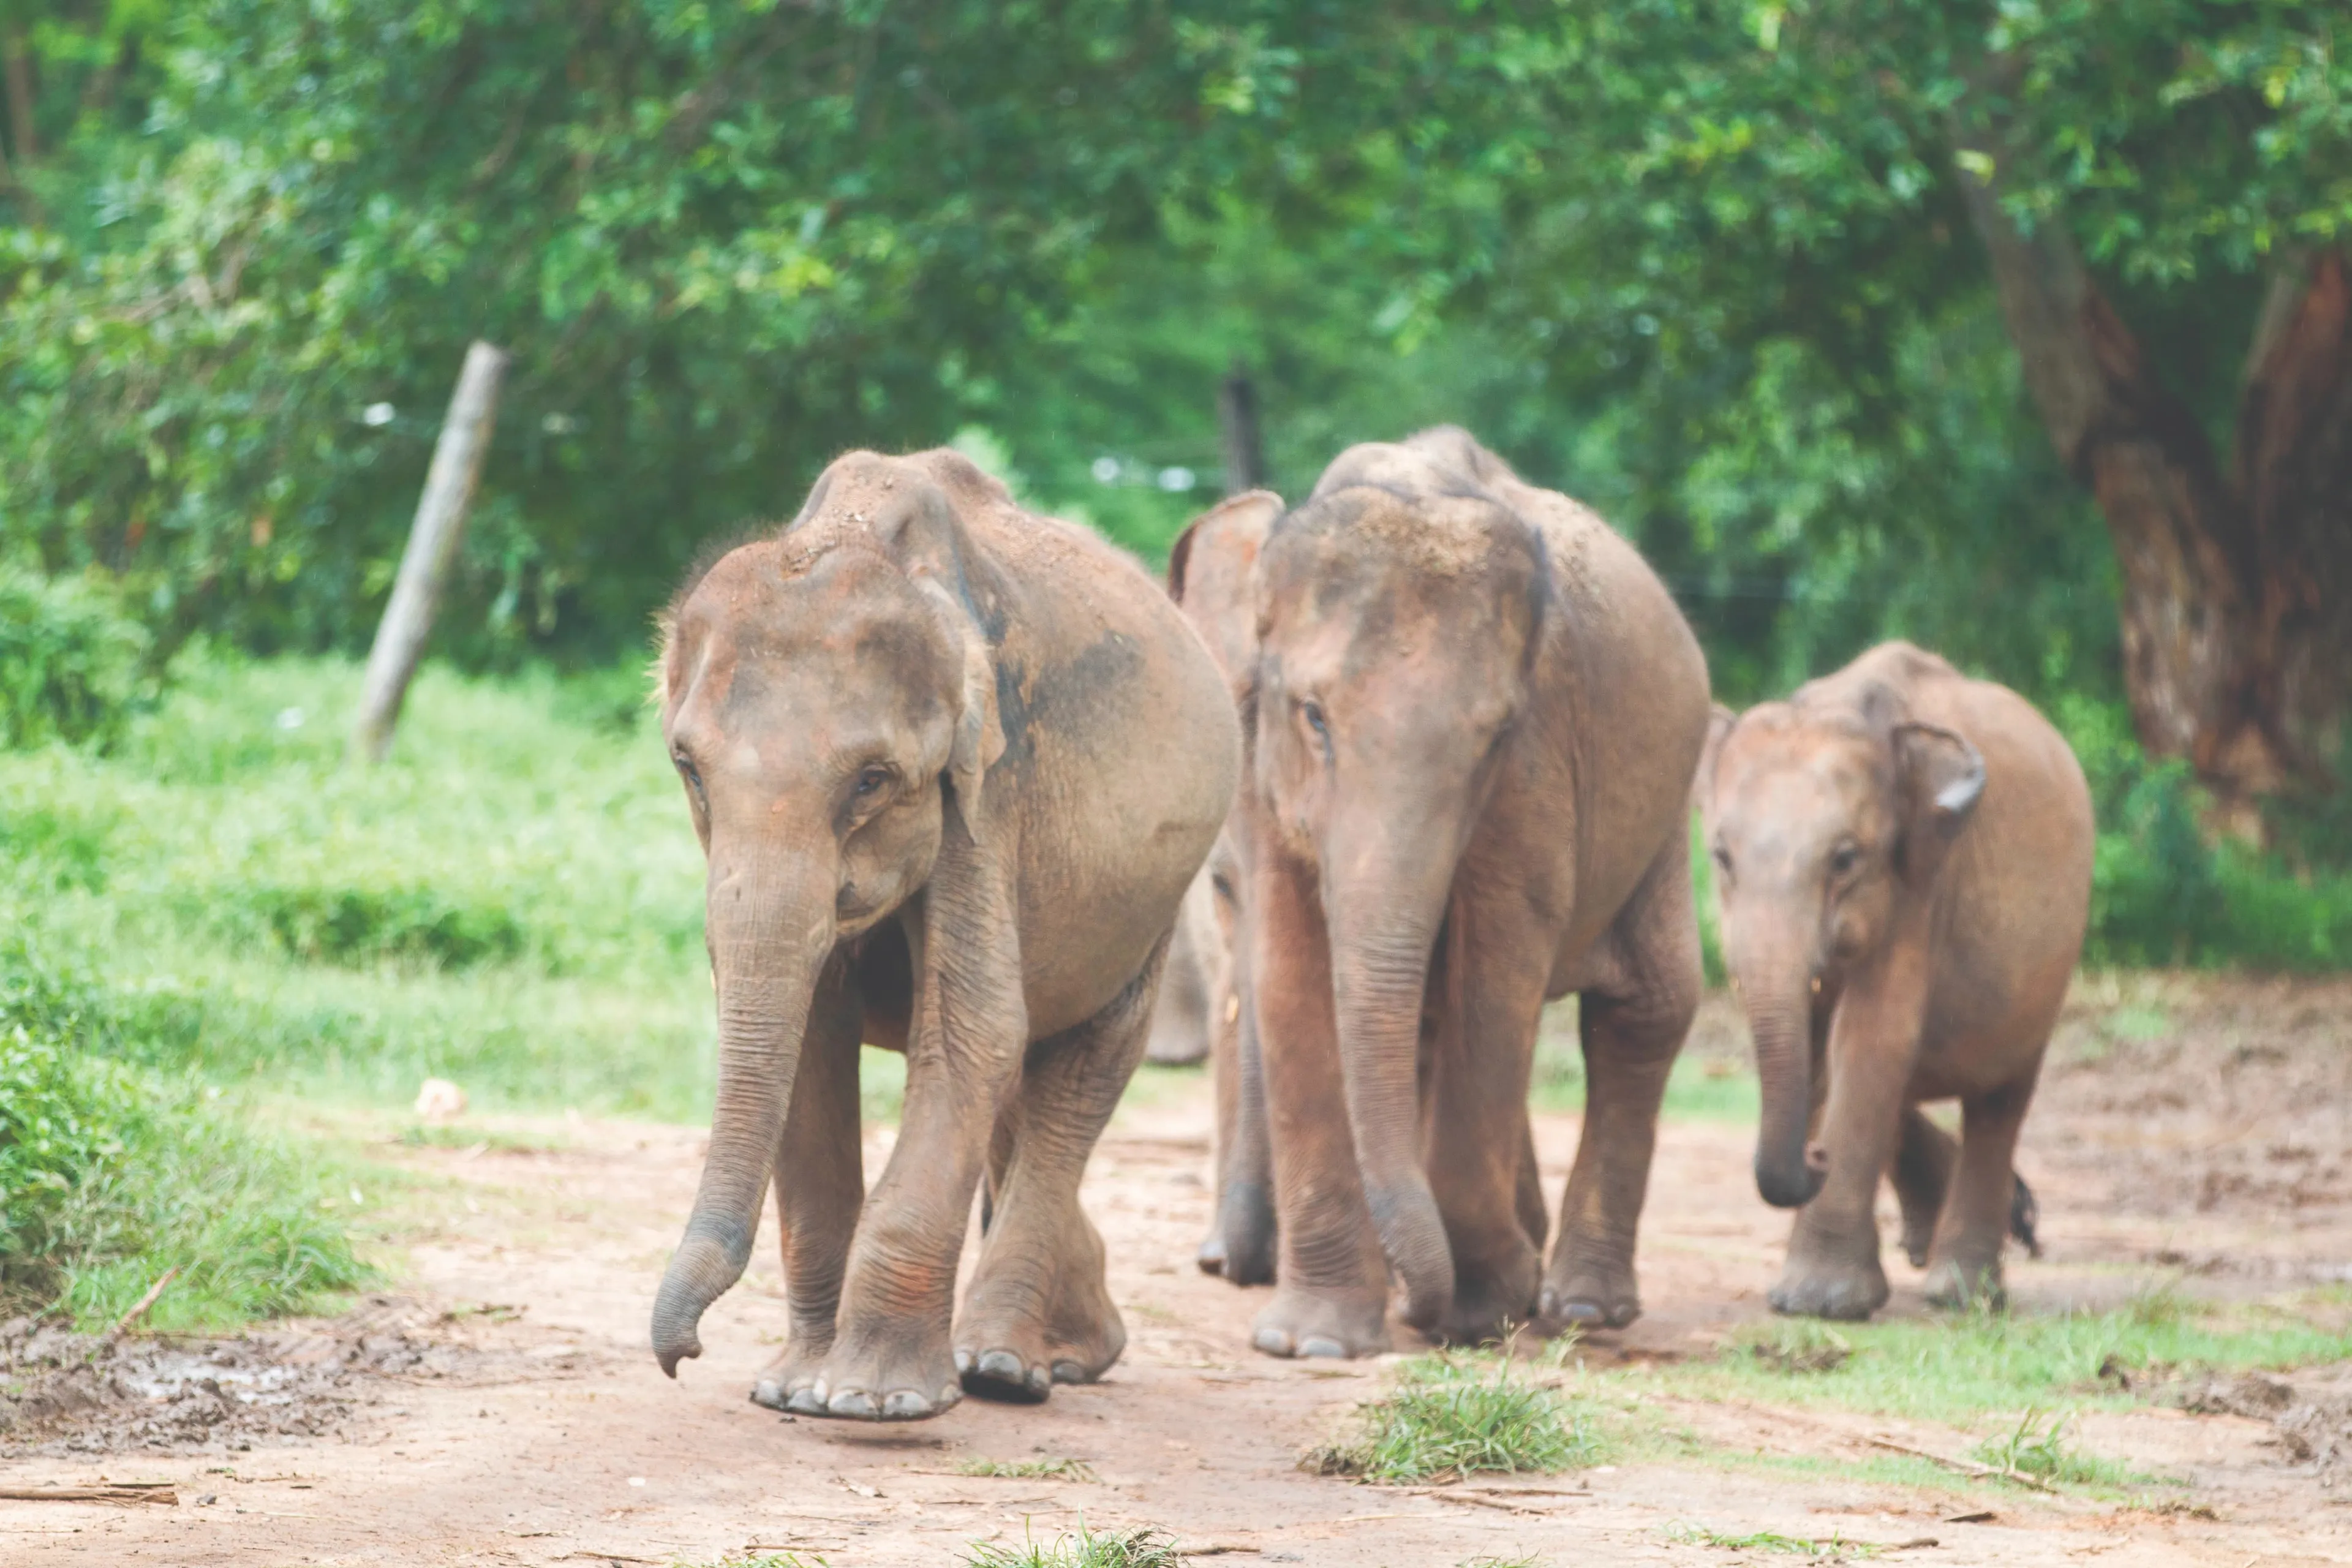 Three baby elephants walkiing in a line